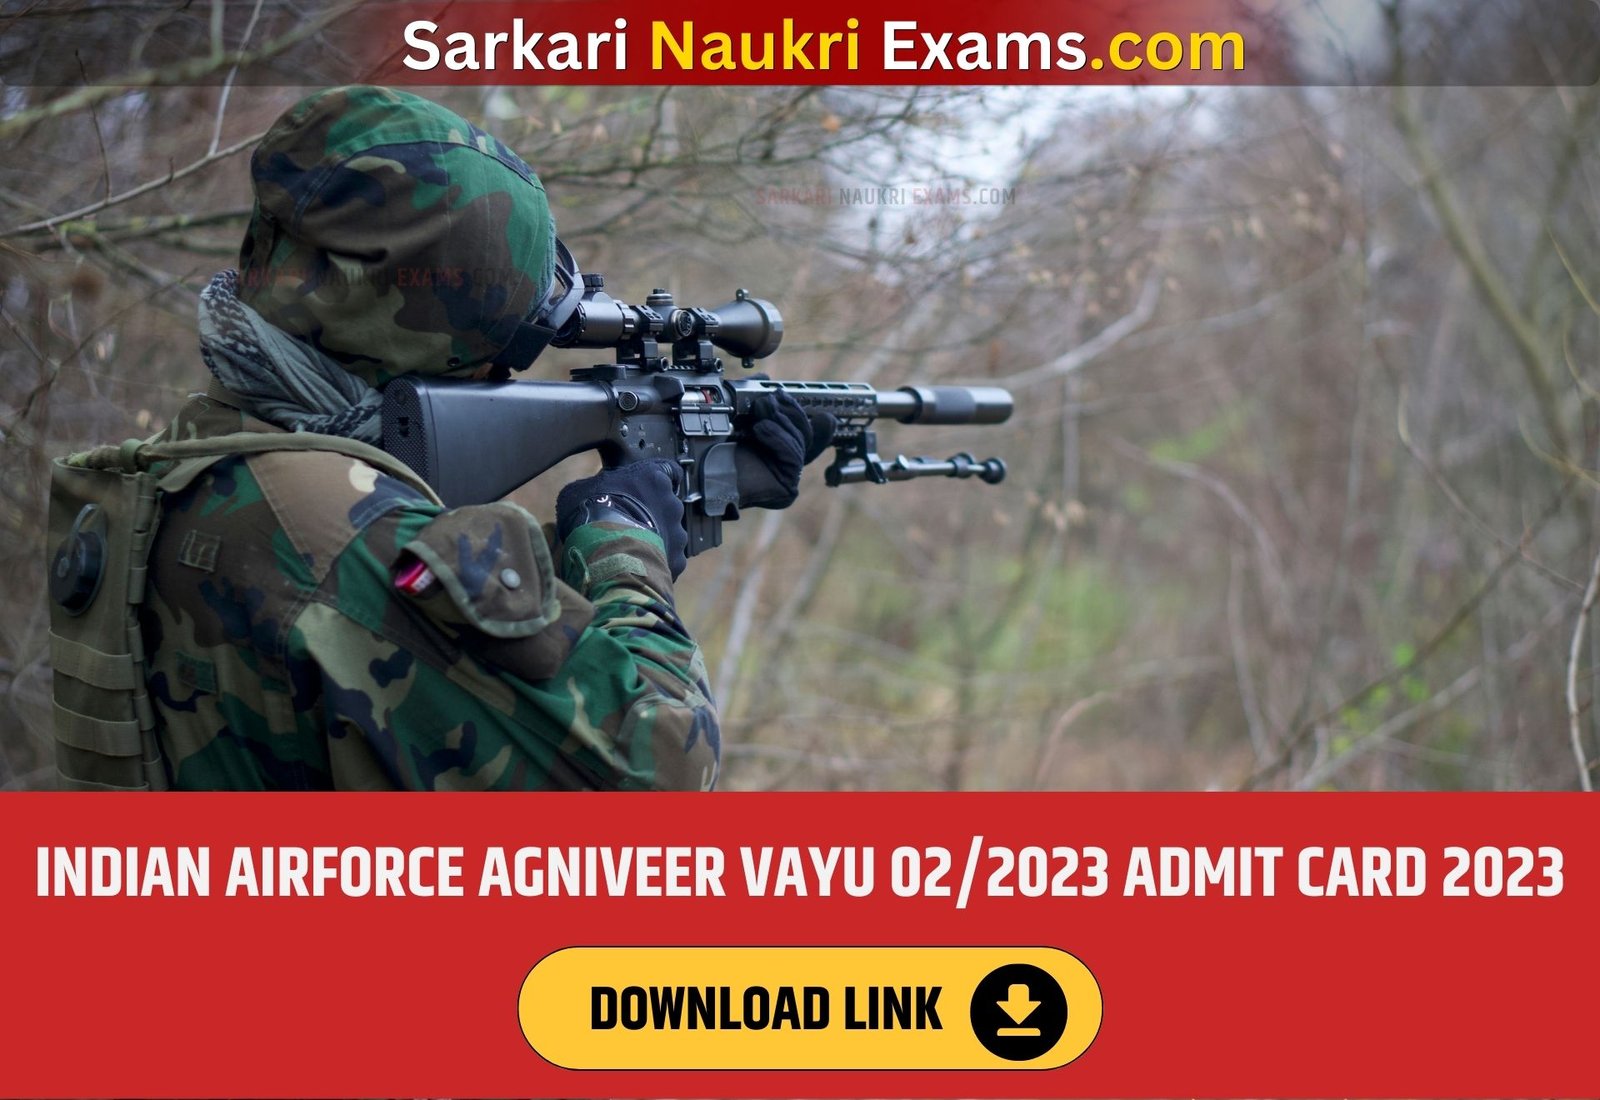 Indian Airforce Agniveer Vayu 02/2023 Admit Card 2023 | Download Link, [Exam Date]